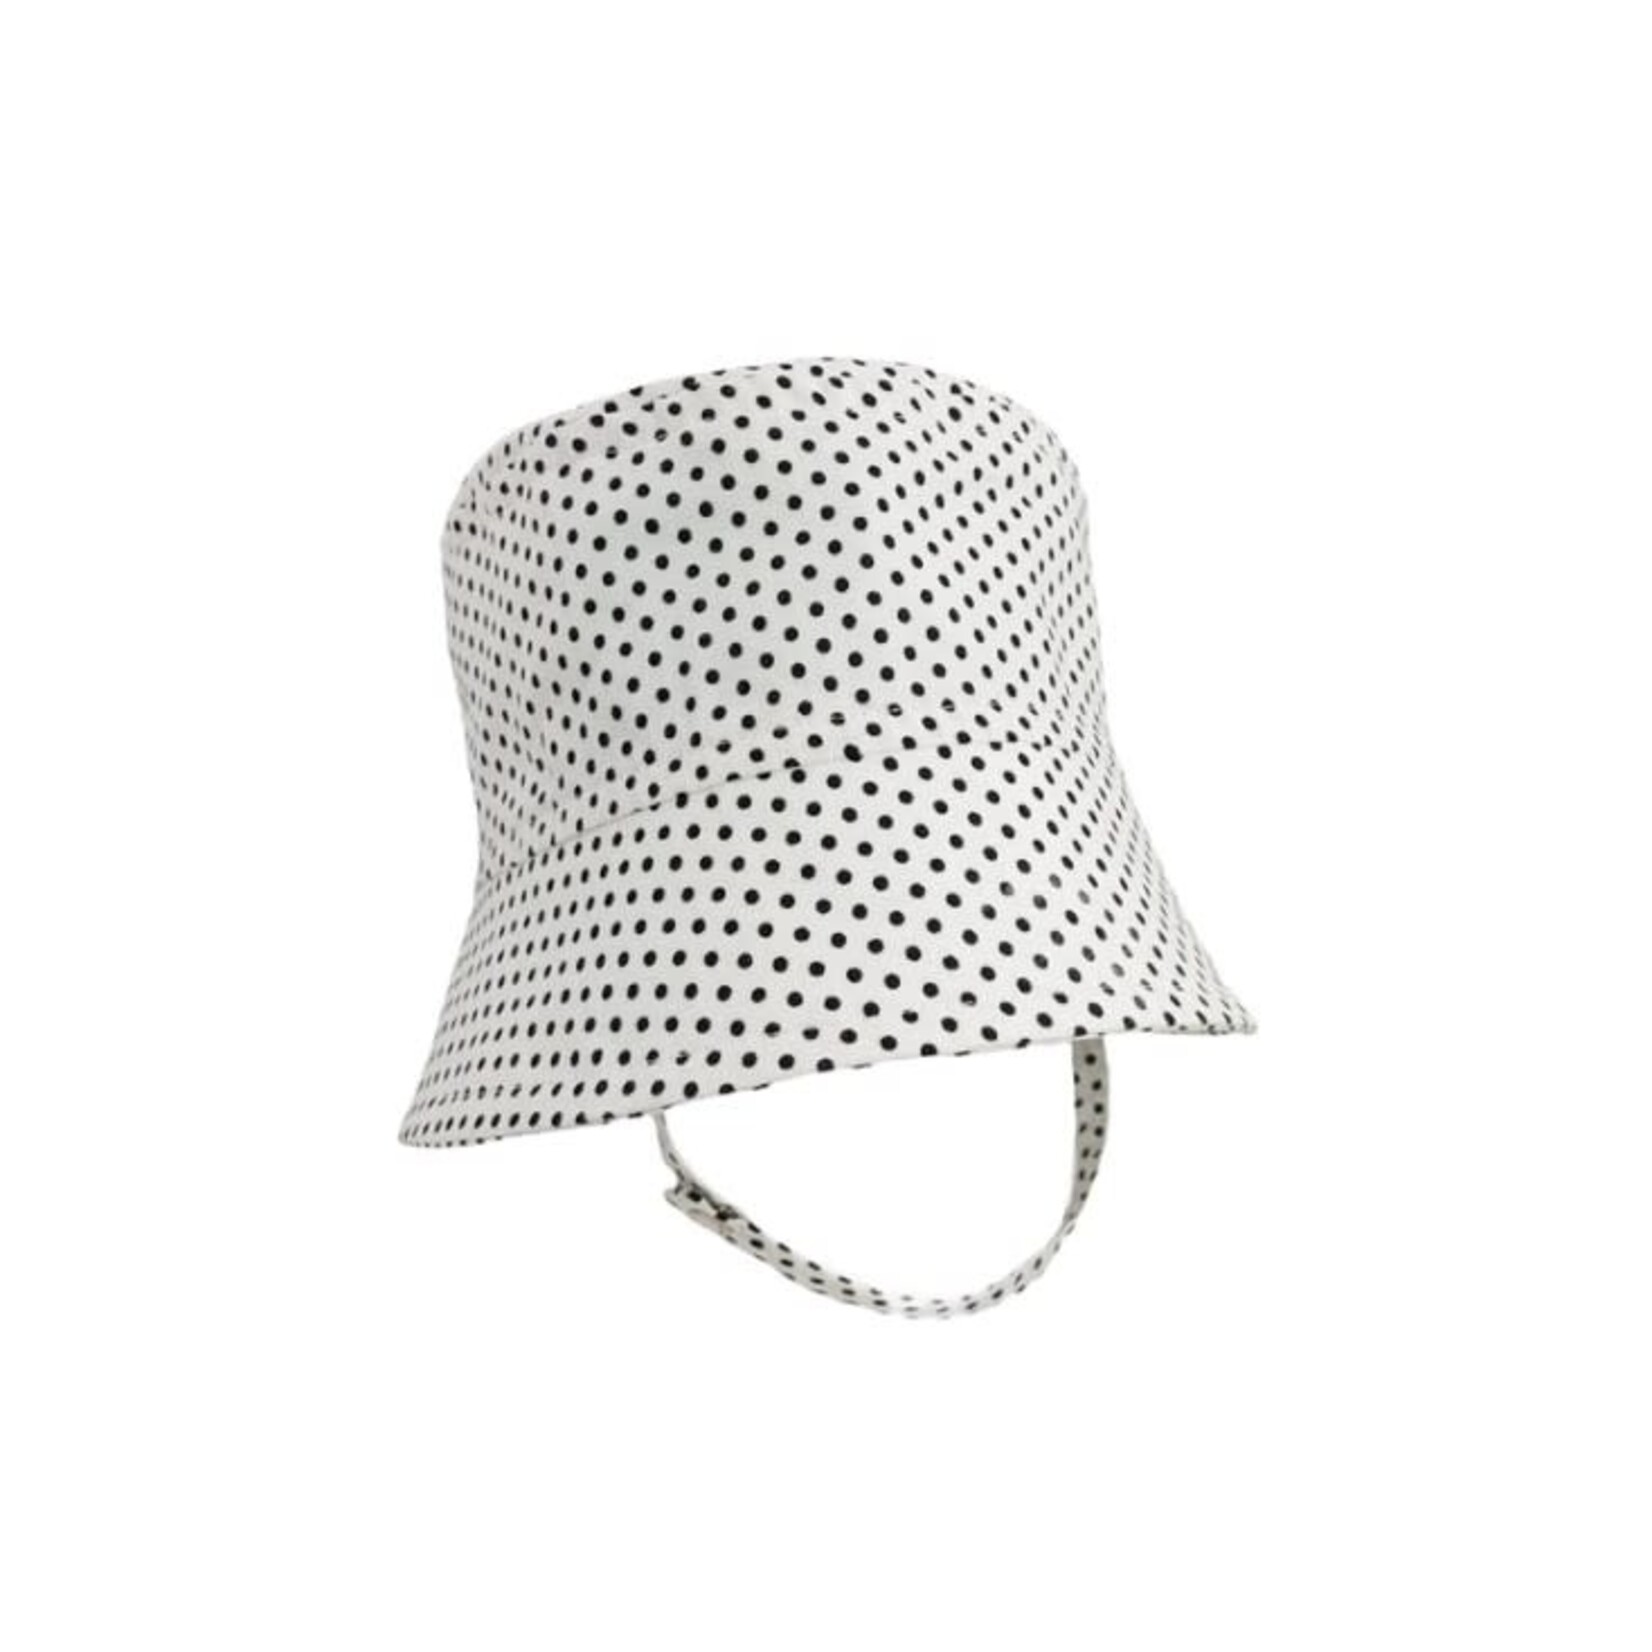 Tirigolo TIRIGOLO - Classic Cotton Adjustable Summer Hat - White with black polka dots